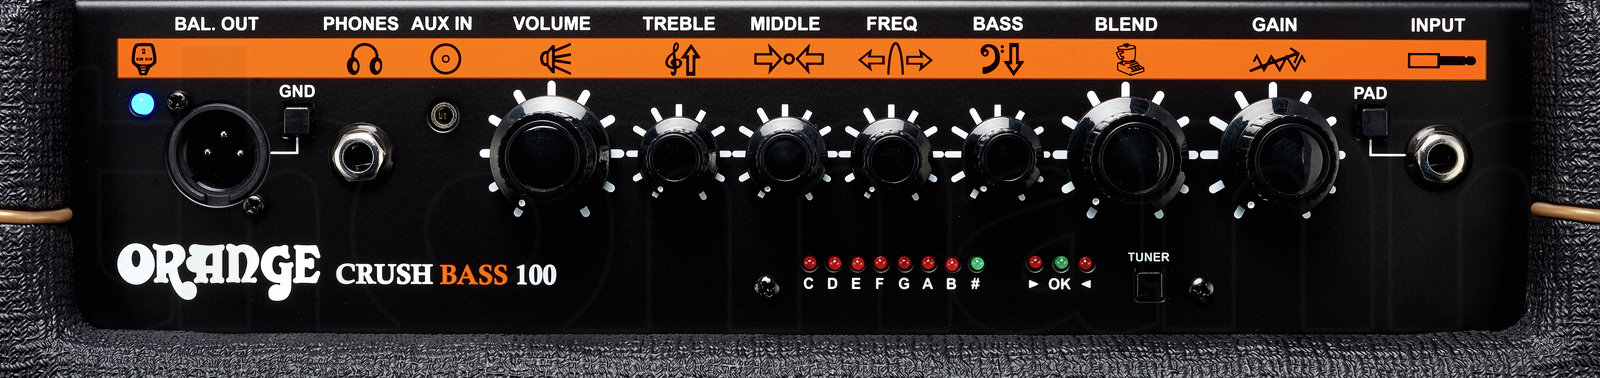 Orange Crush Bass 100 100w 1x15 - Black - Combo Ampli Basse - Variation 2